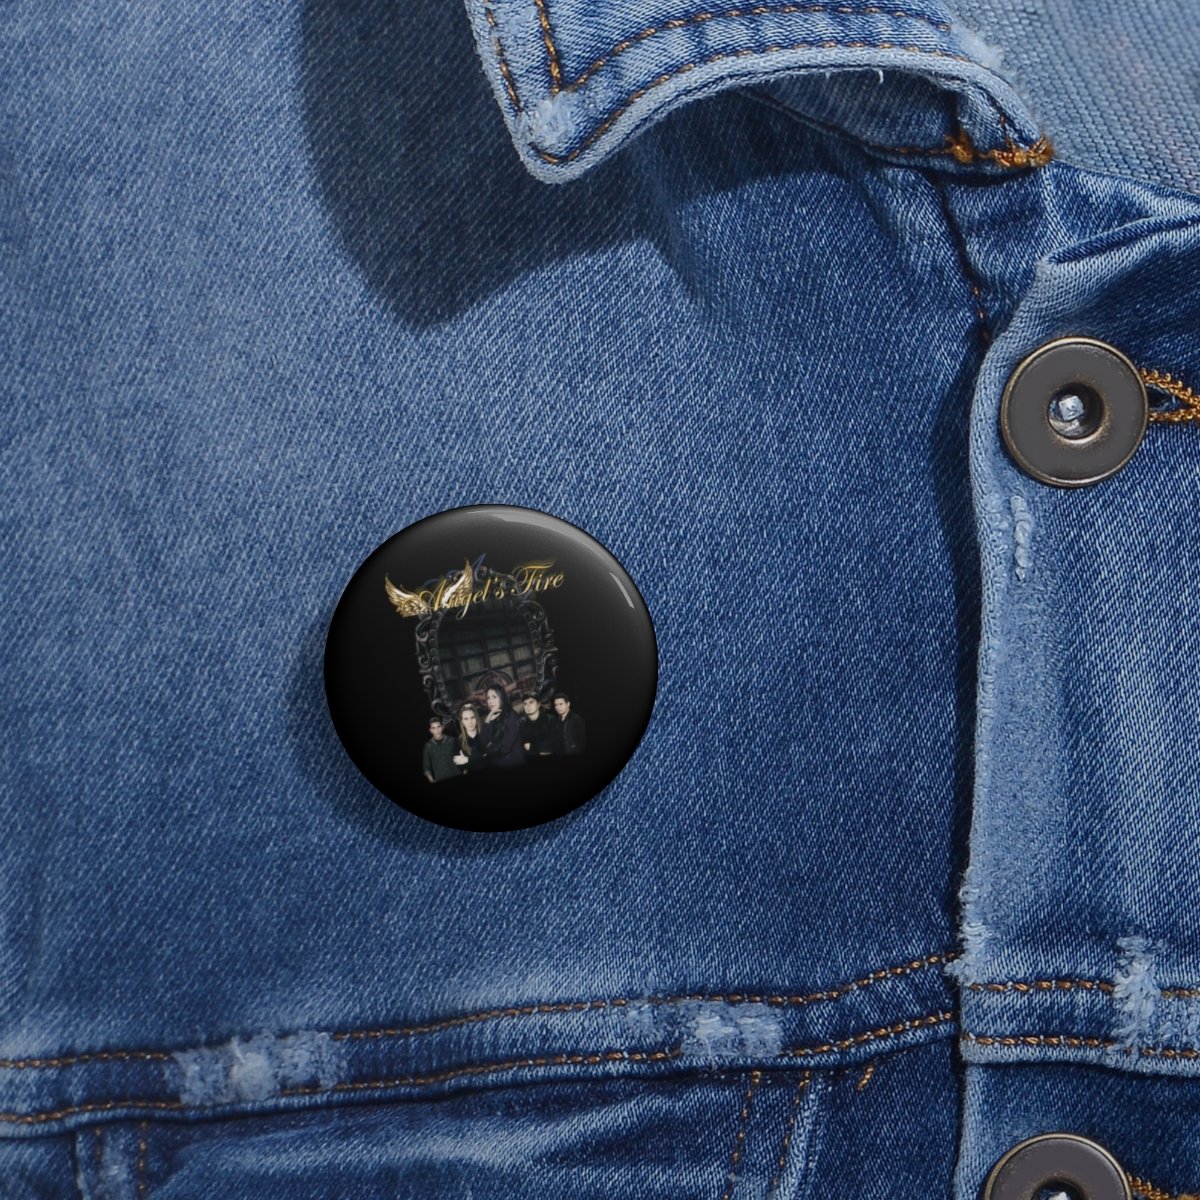 Angel’s Fire Pin Buttons